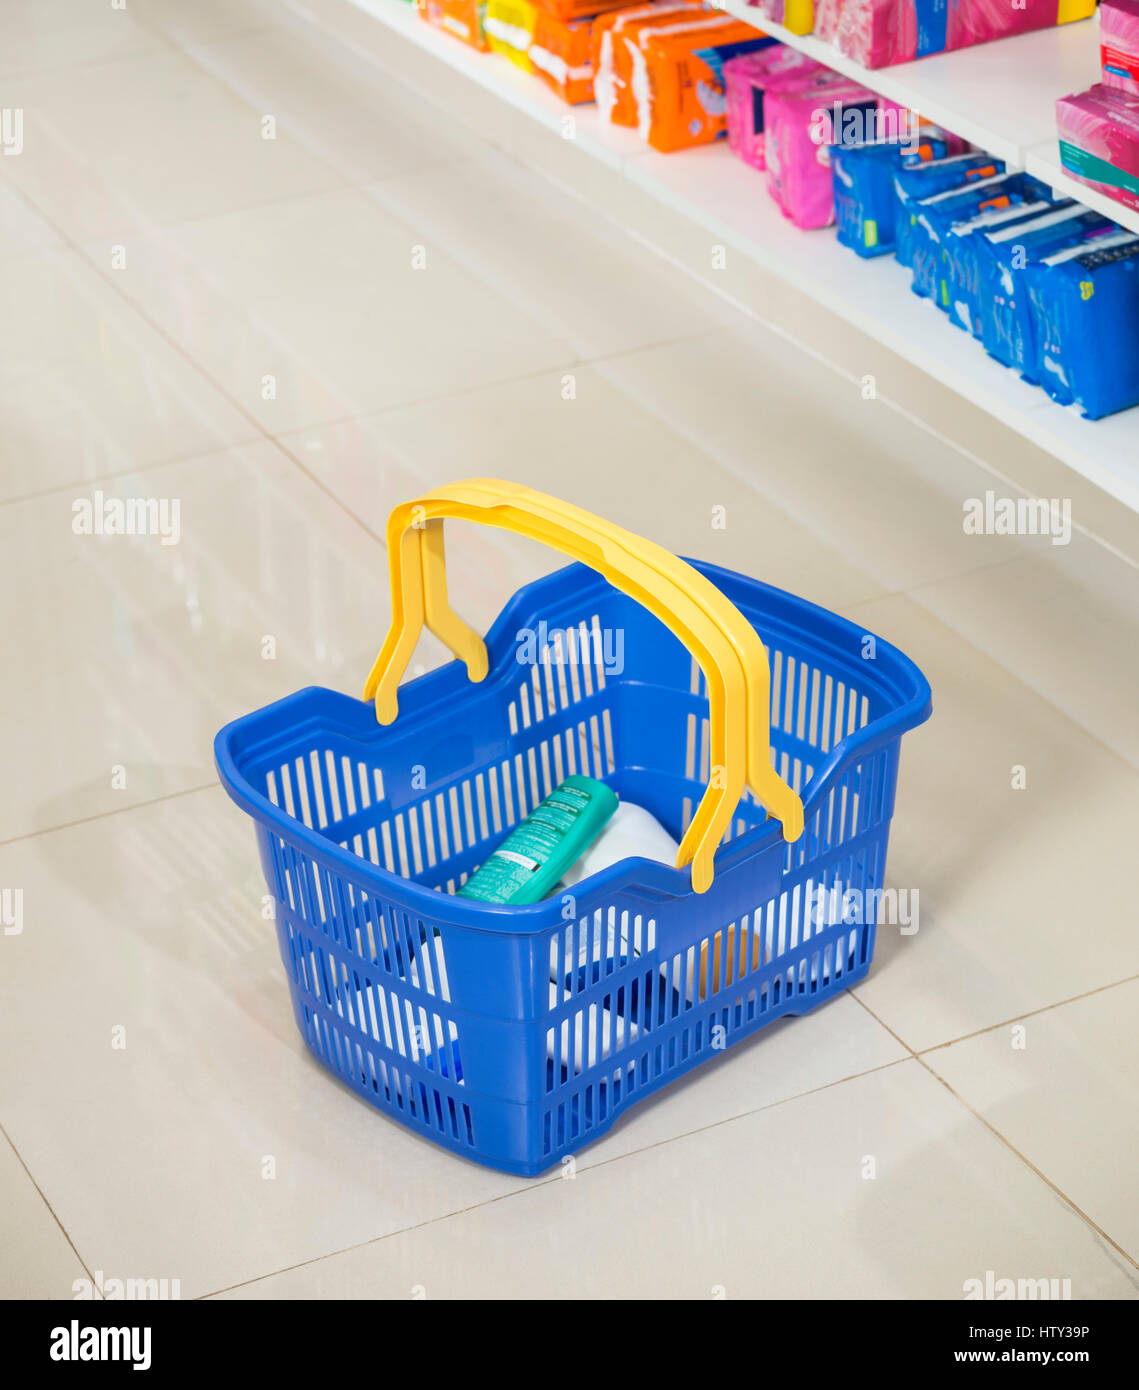 Shopping Basket On Aisle By Shelves In Pharmacy Stock Photo